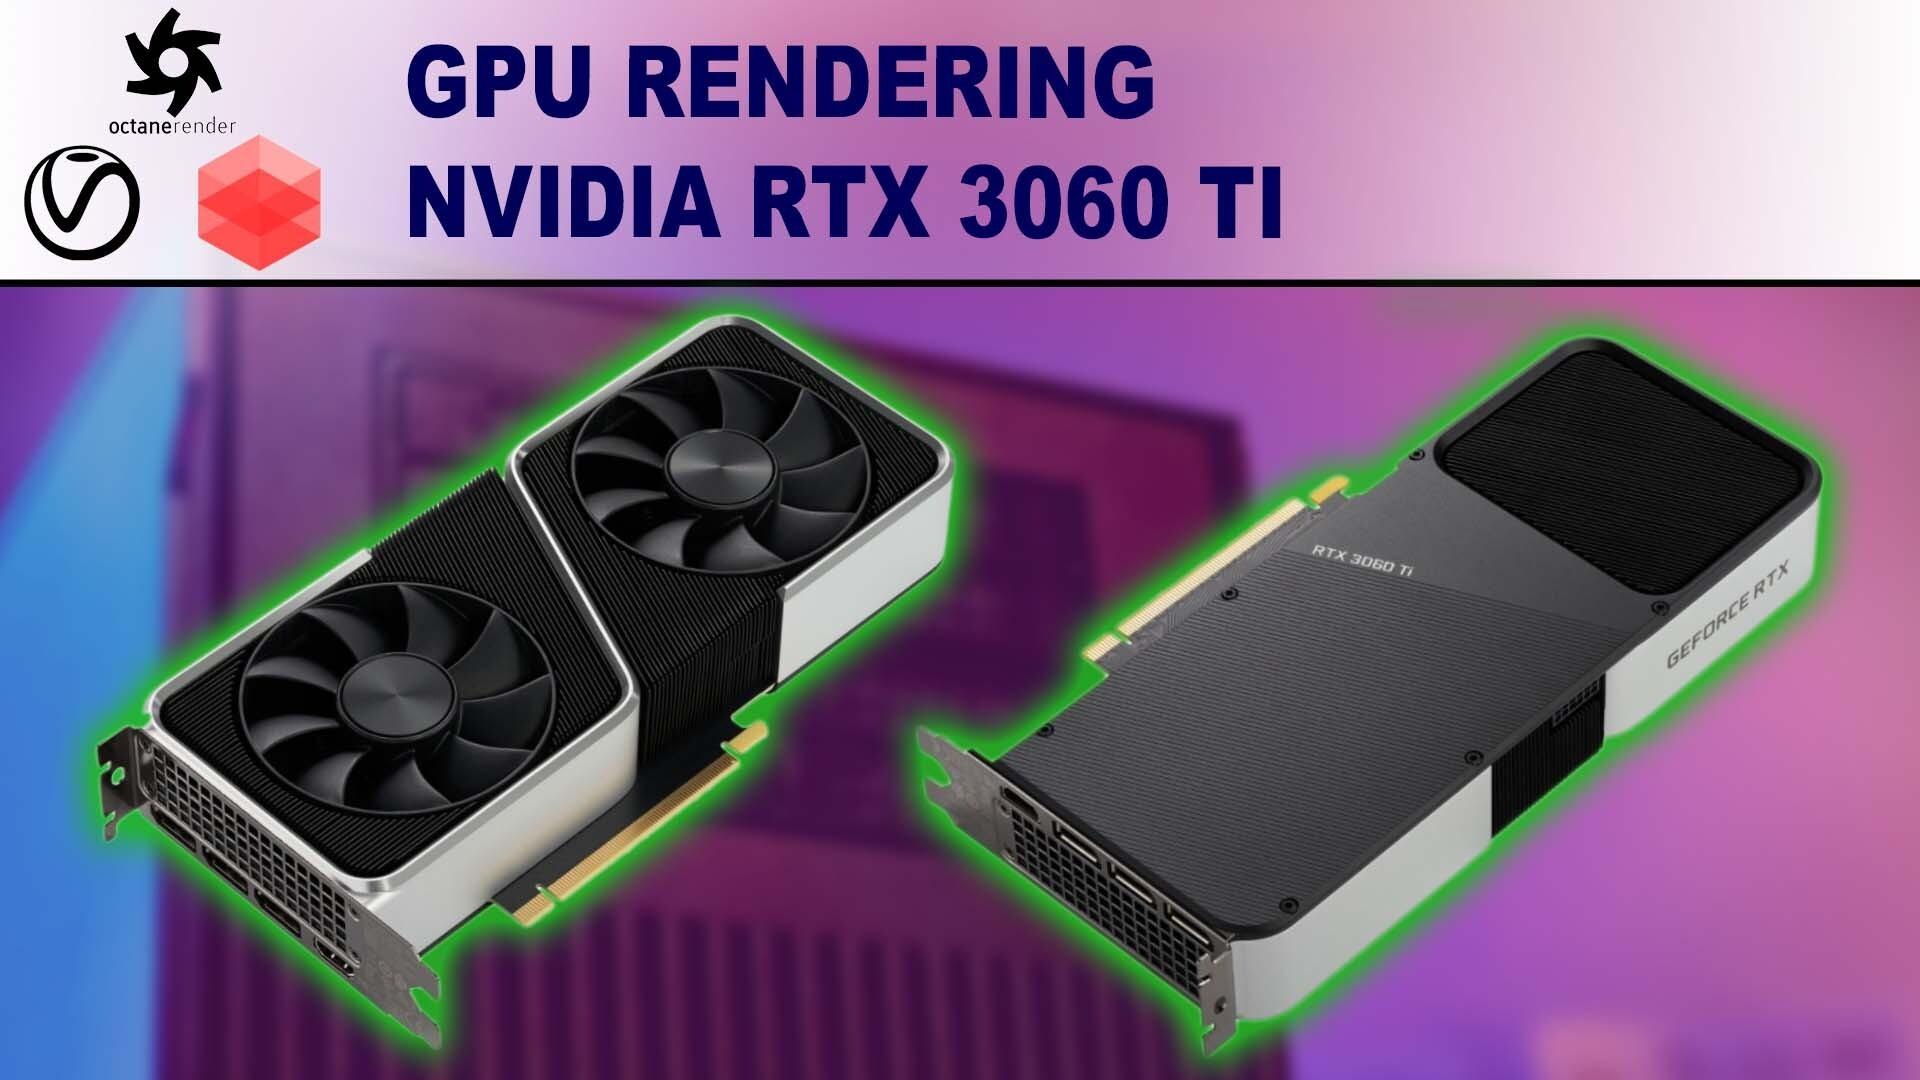 NVIDIA GeForce RTX 3060 Ti Performance in GPU Rendering